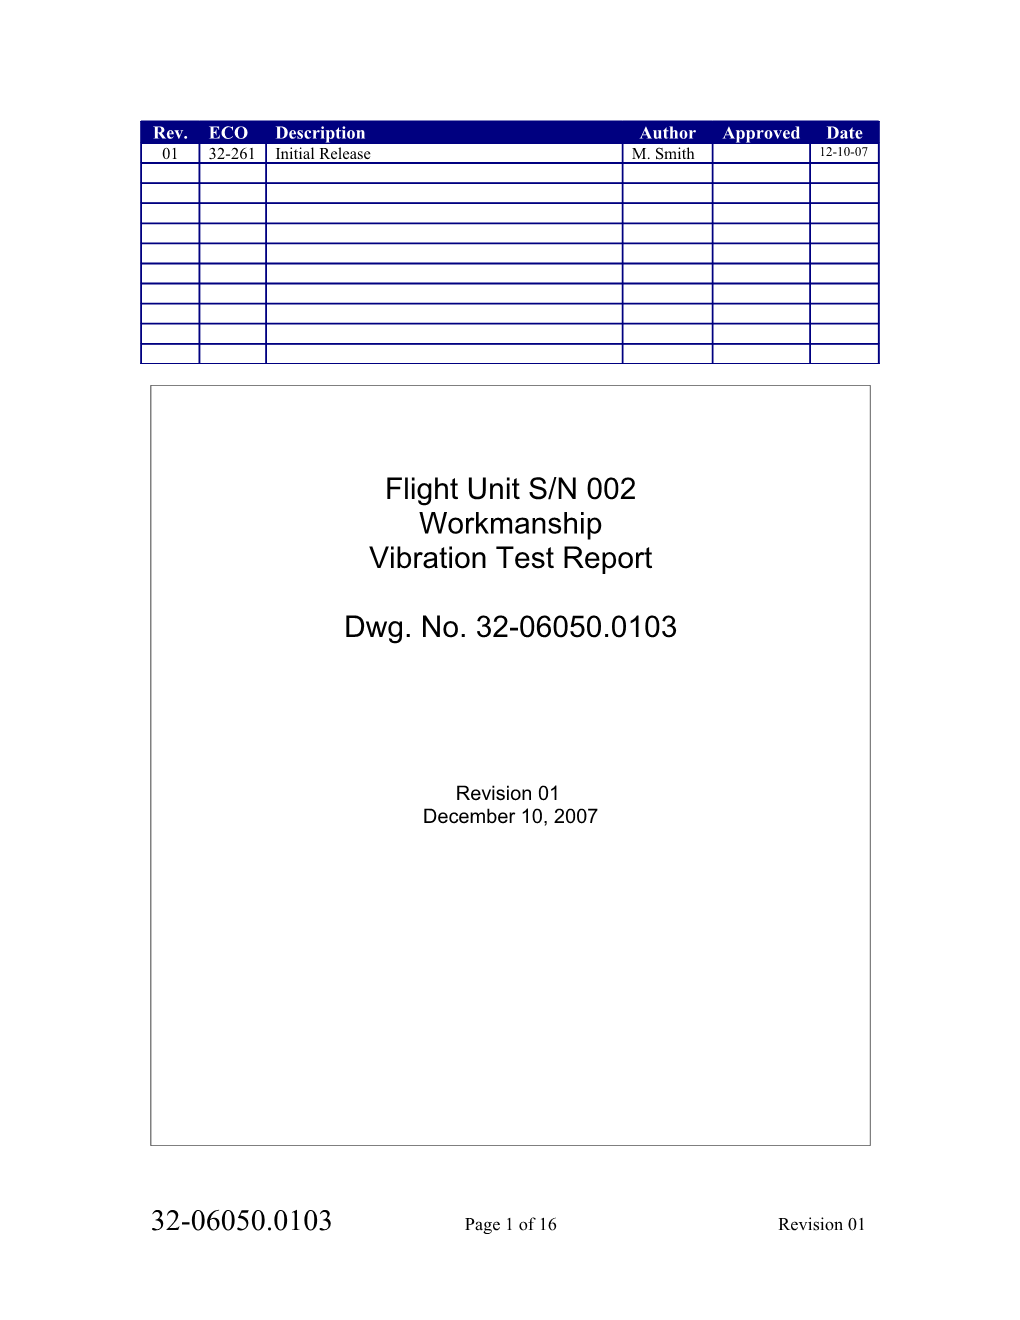 Flight Unit S/N 002